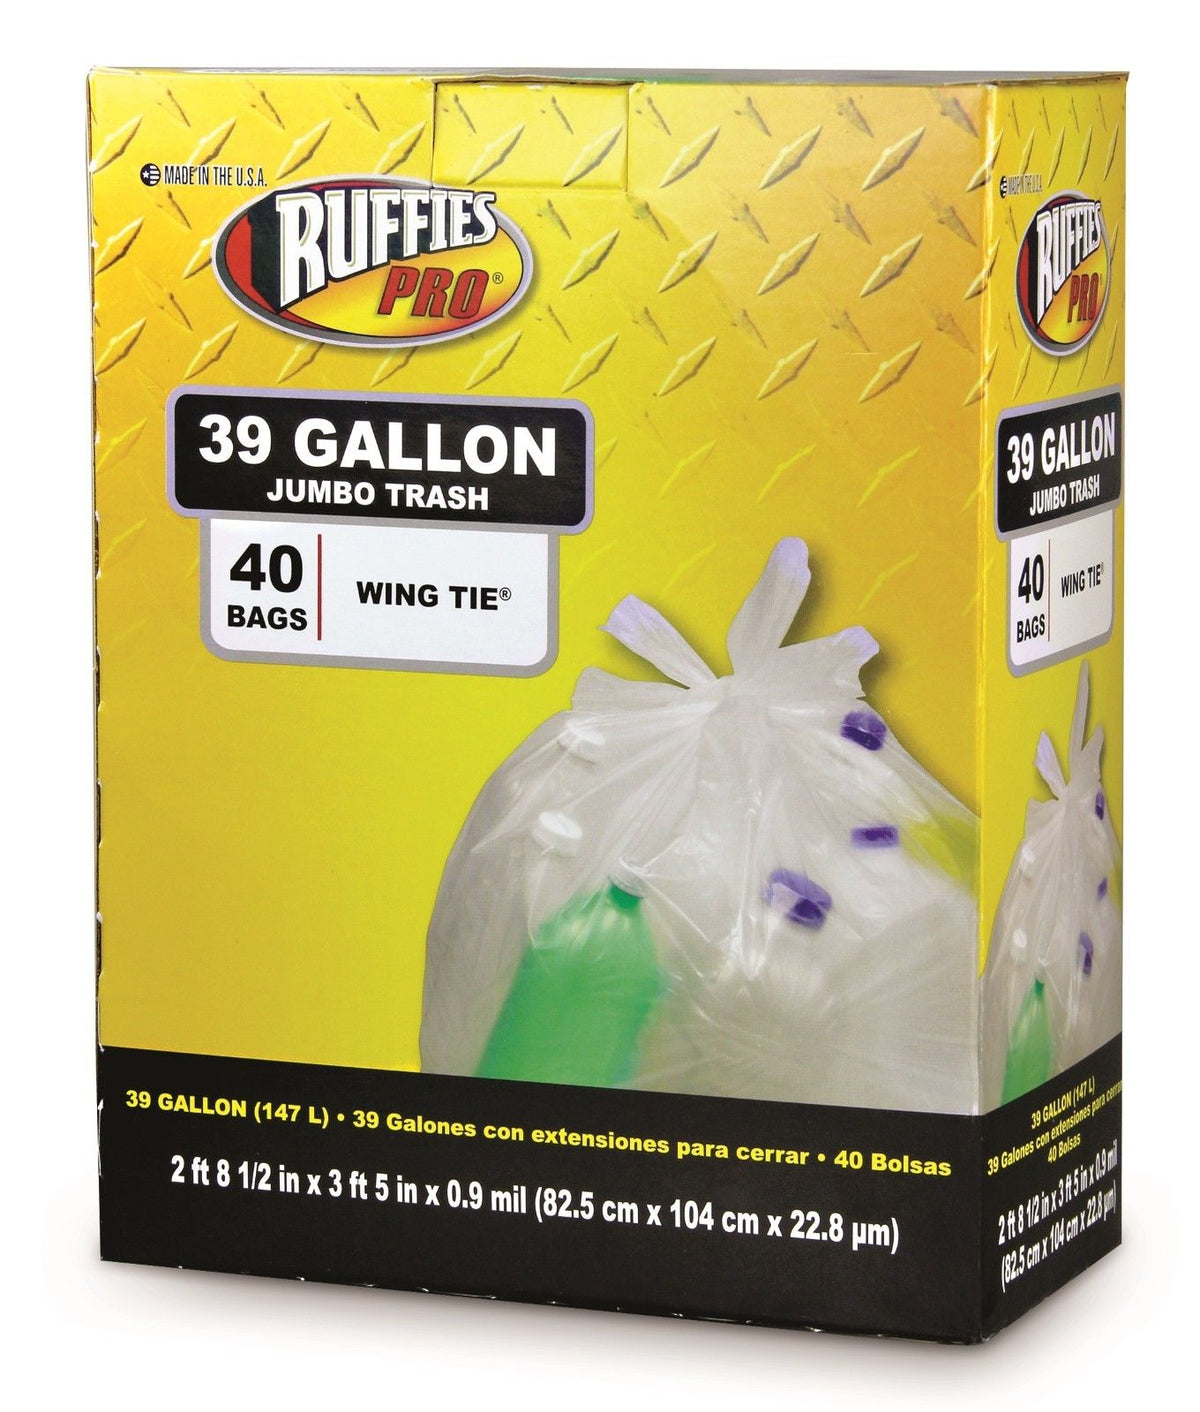 Ruffies Pro 1124921 Jumbo Trash Bags, 39 Gallon